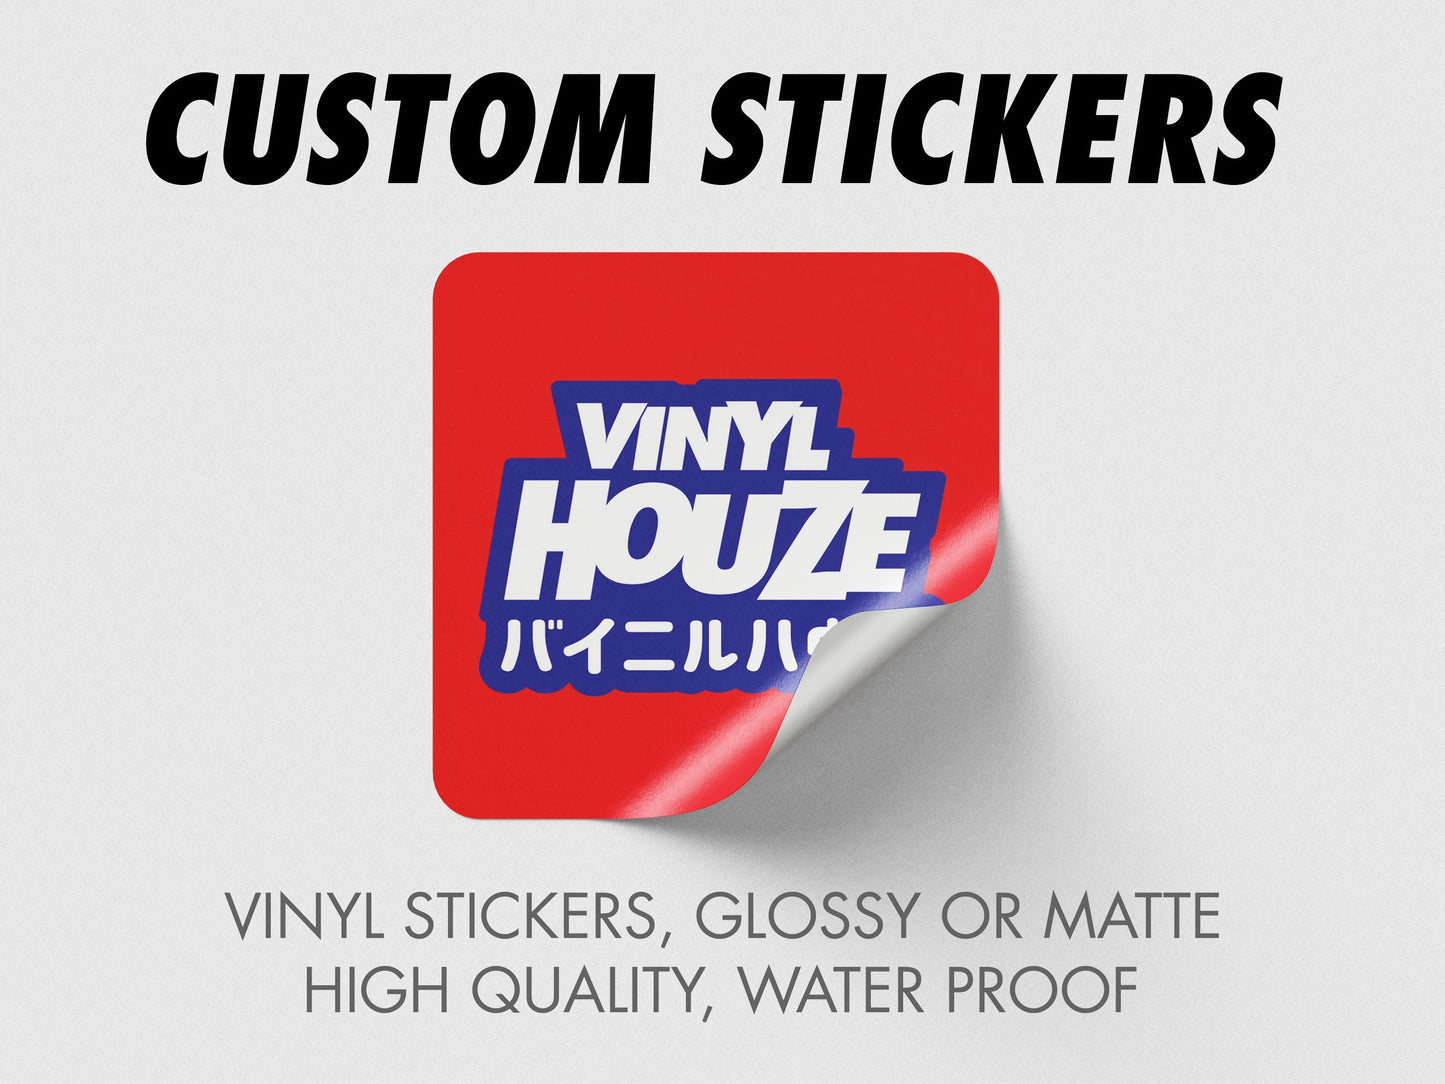 50 Personalized Square Stickers - VINYL HOUZE